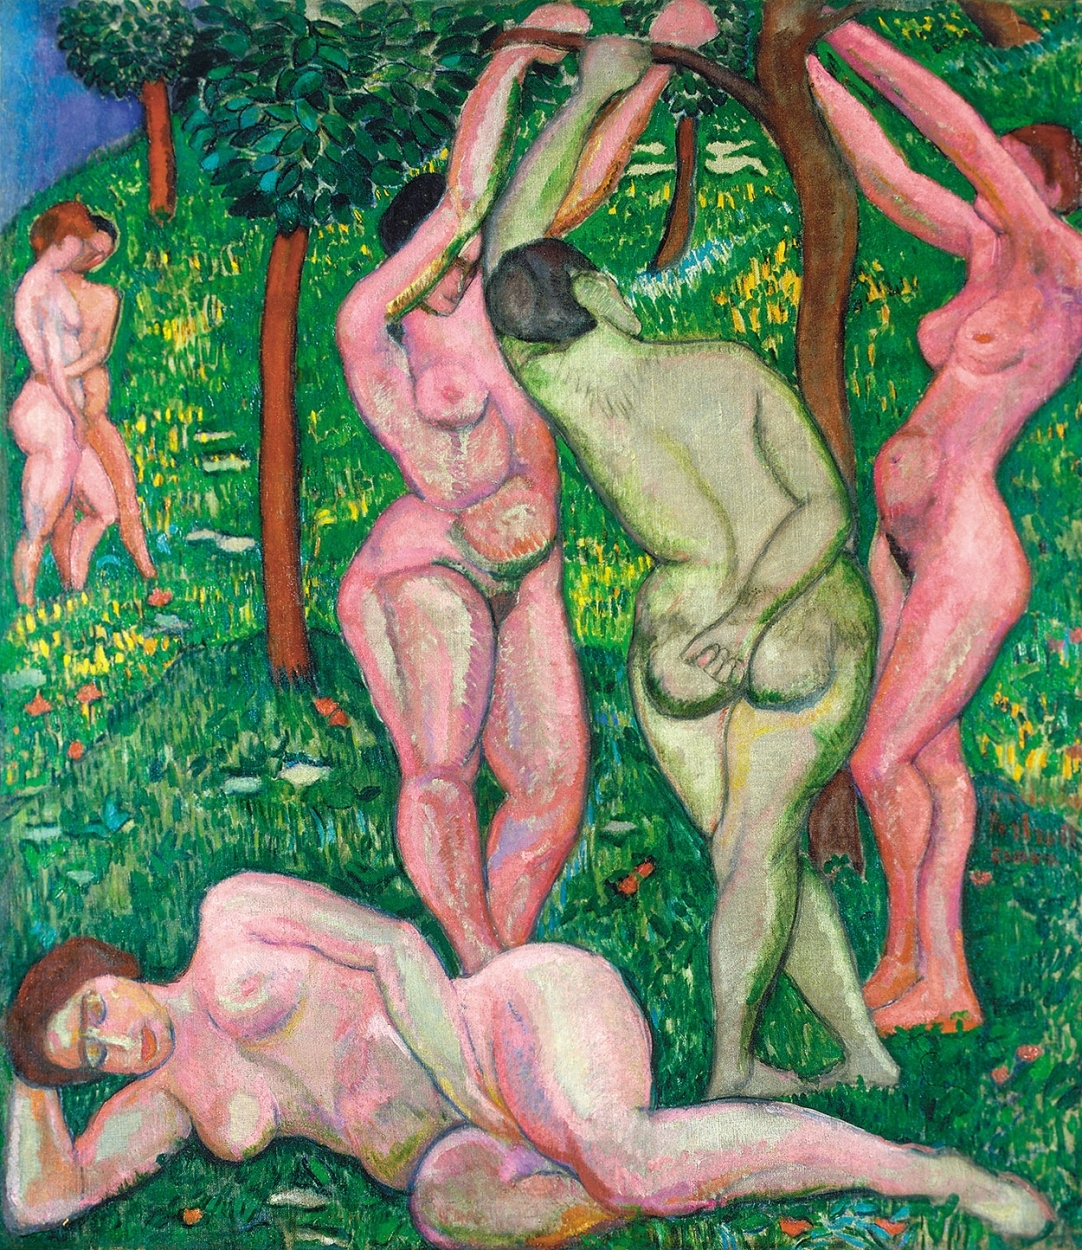 Perlrott-Csaba Vilmos (1880-1955) Nudes Outdoors, 1907-1909